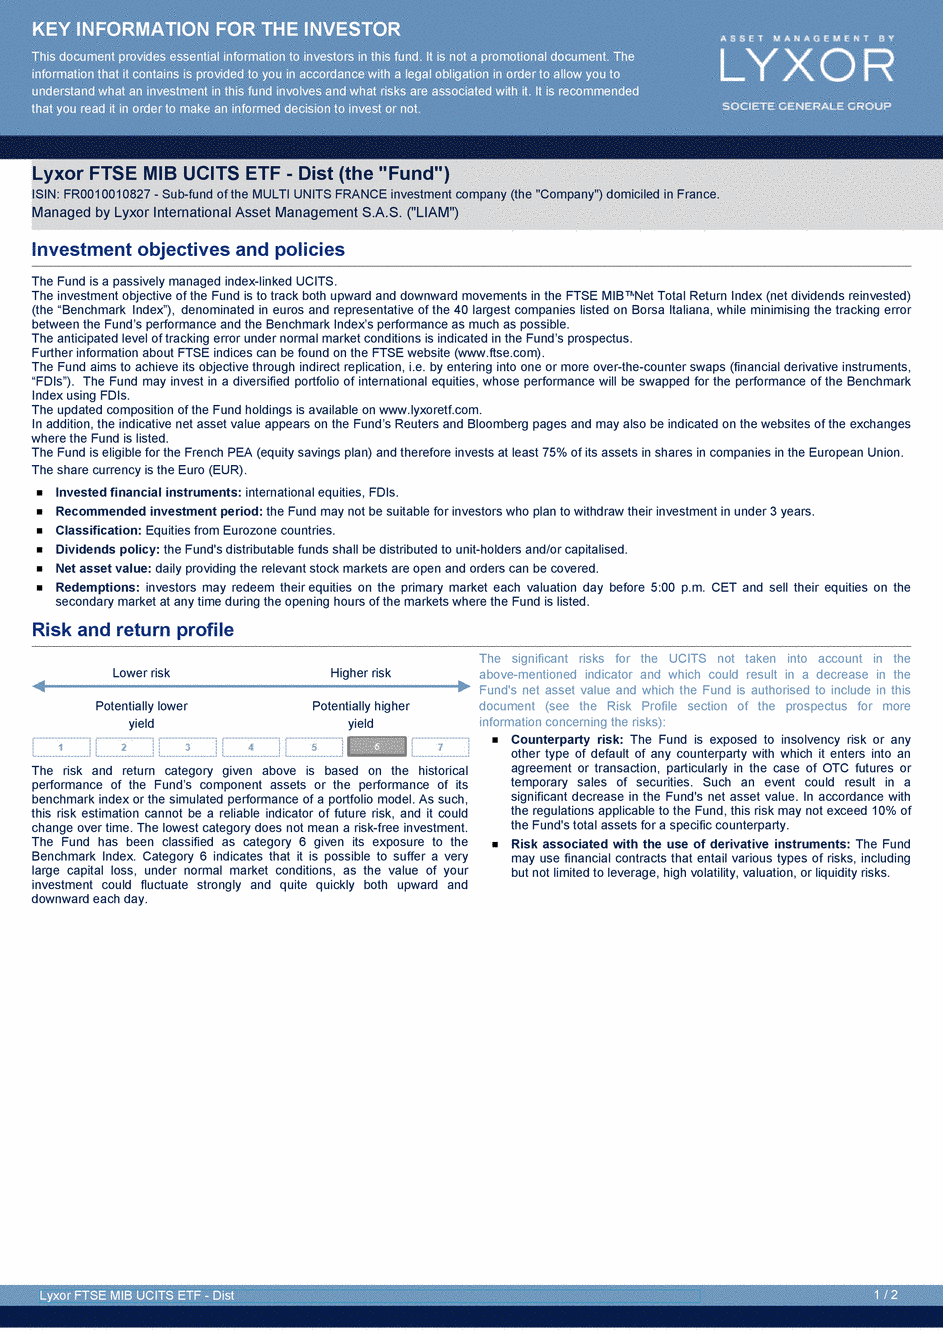 DICI Lyxor FTSE MIB UCITS ETF - Dist - 19/02/2021 - Anglais